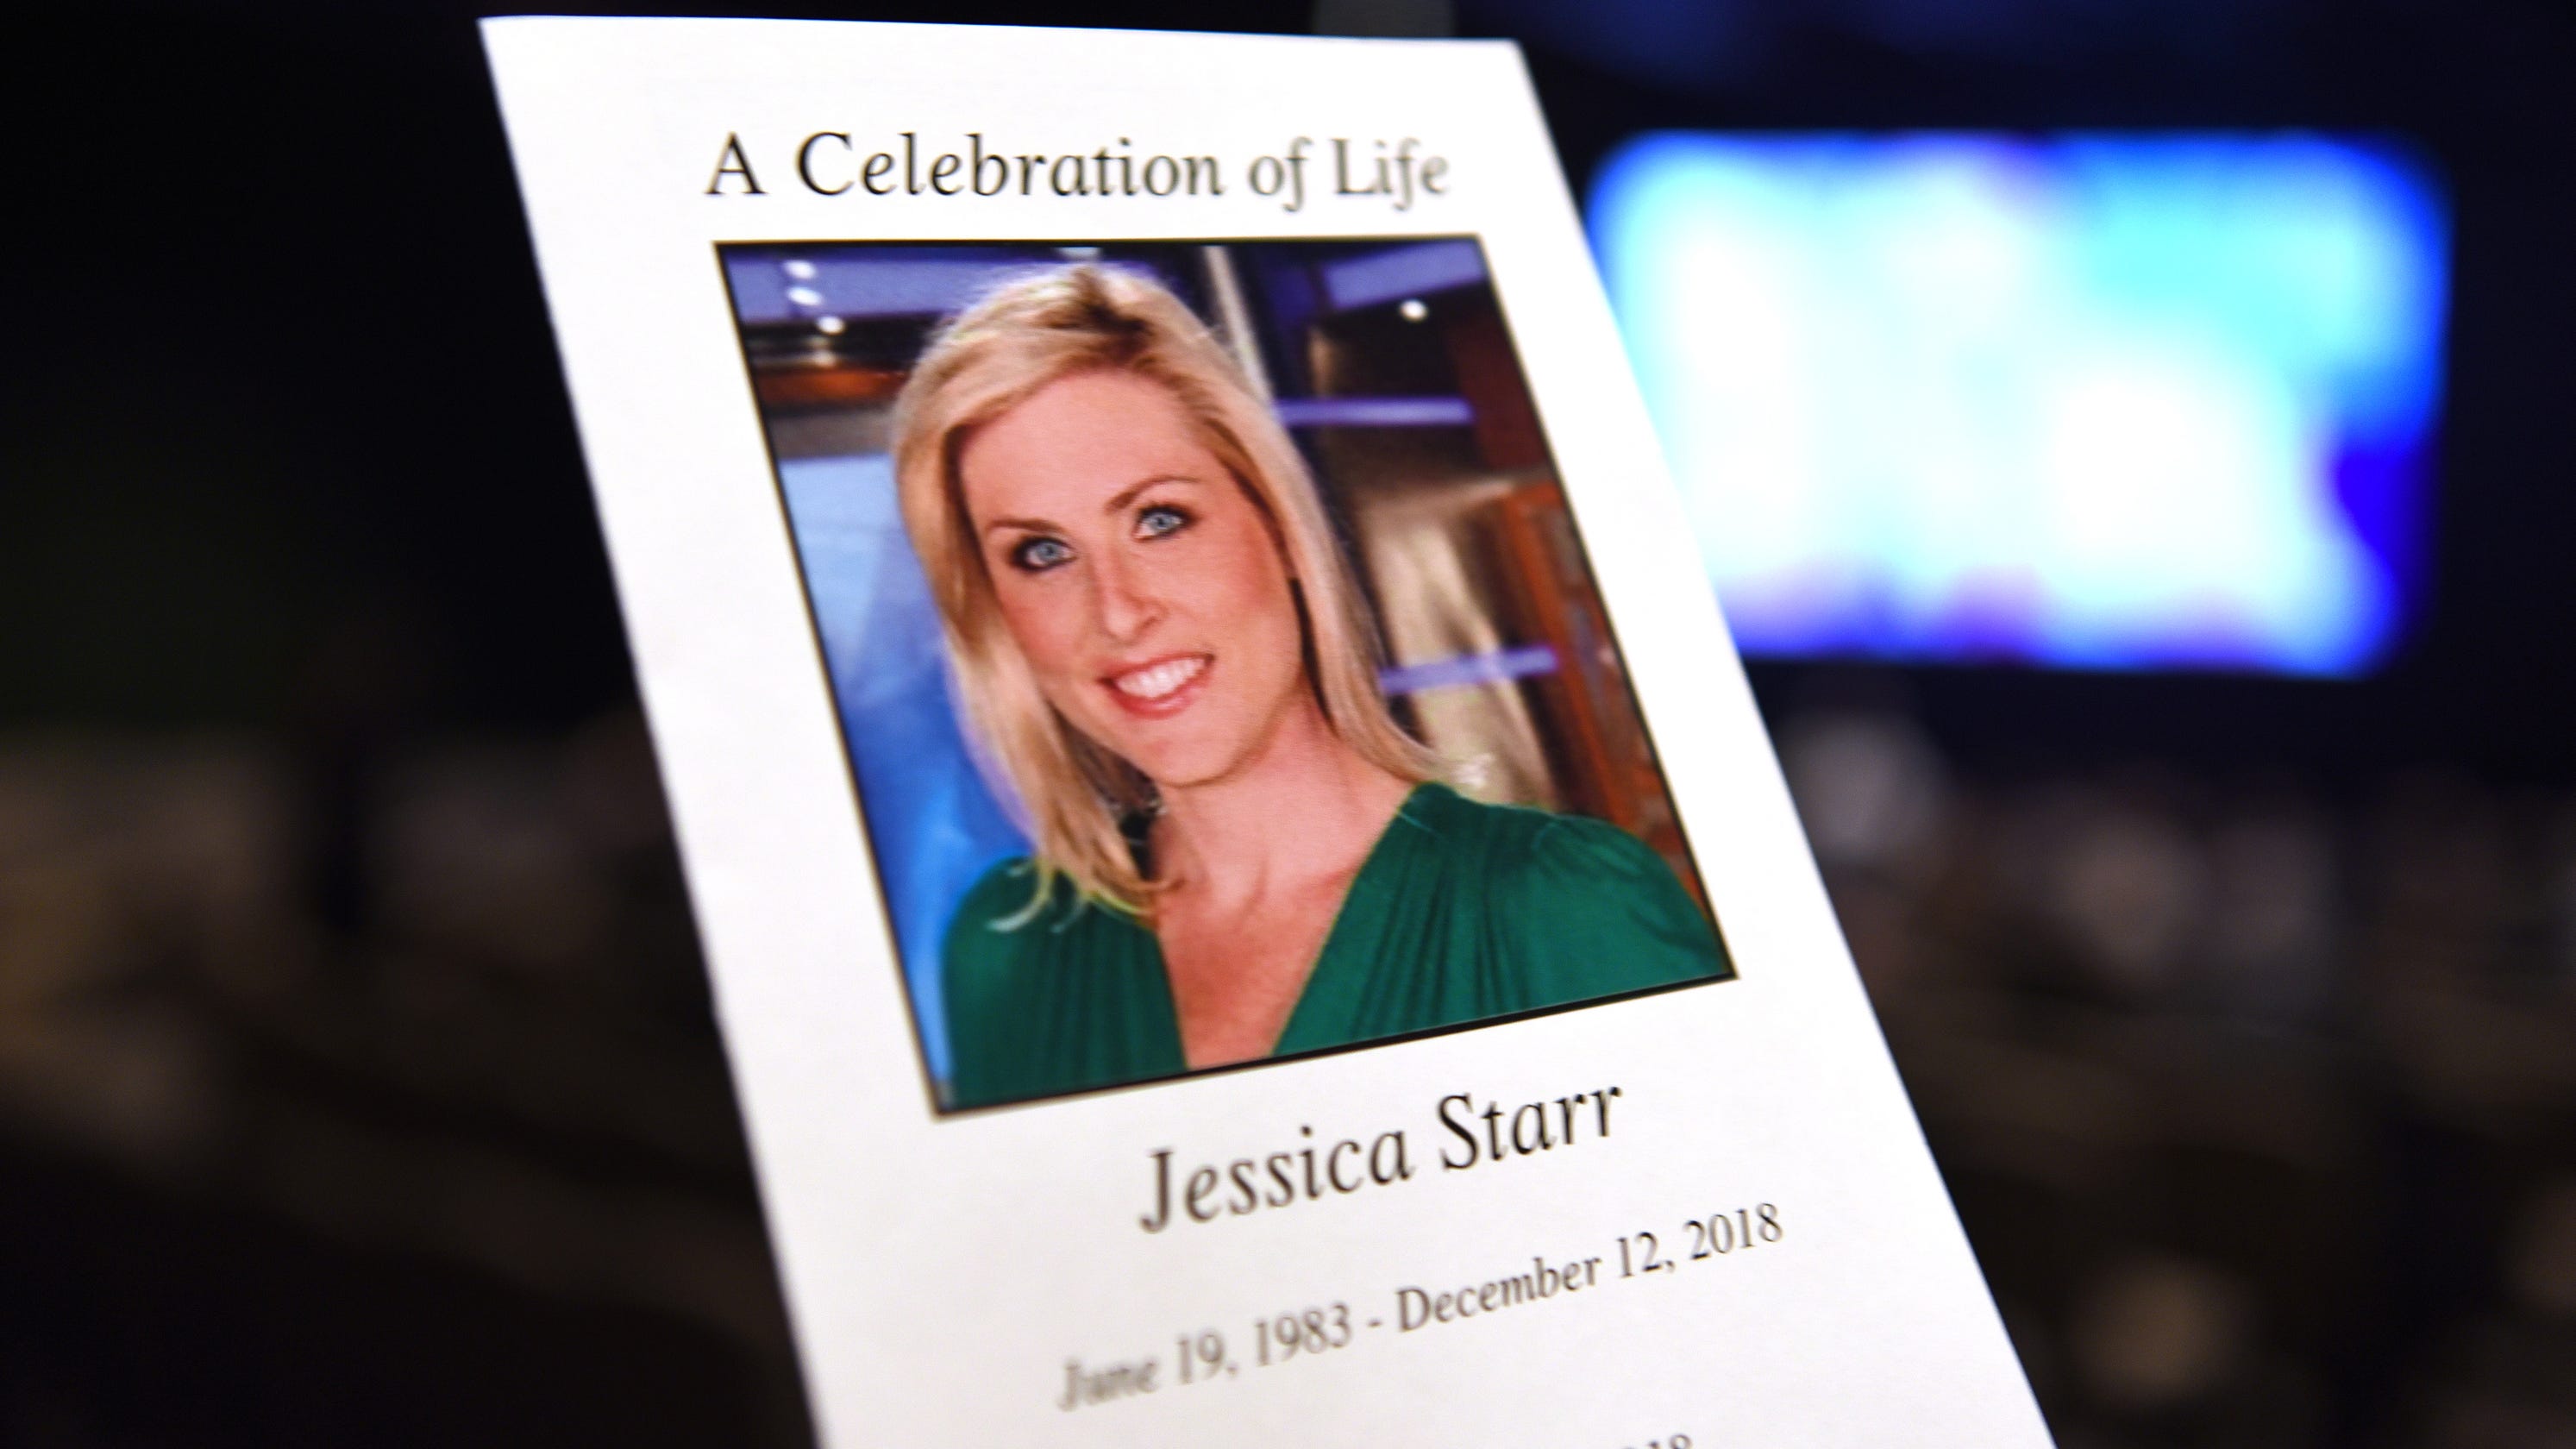 Life of Fox 2 meteorologist Jessica Starr celebrated in Novi2987 x 1680